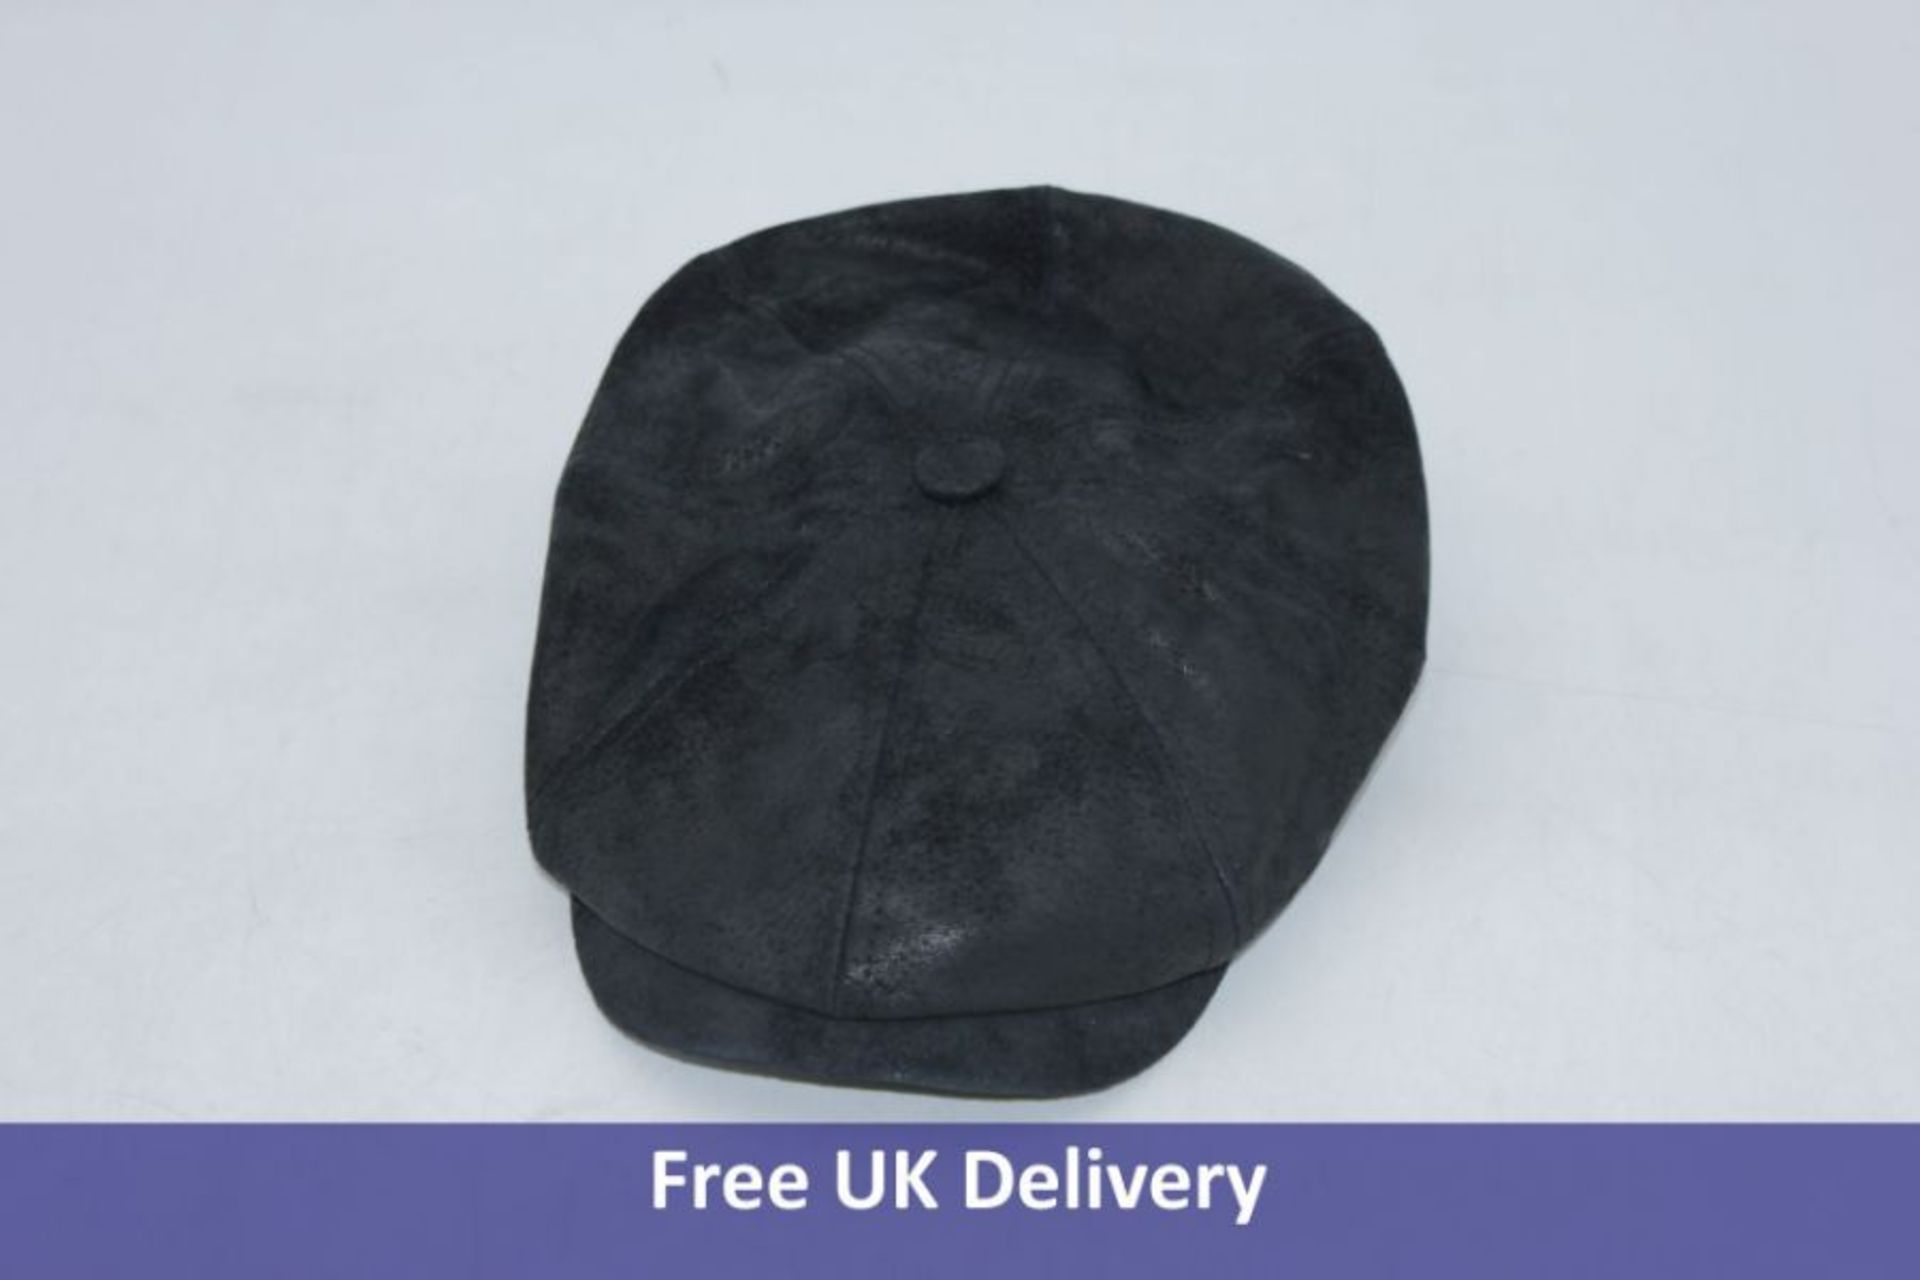 Two Stetson Leather Hatteras Newsboy Flat Cap, Black, UK L